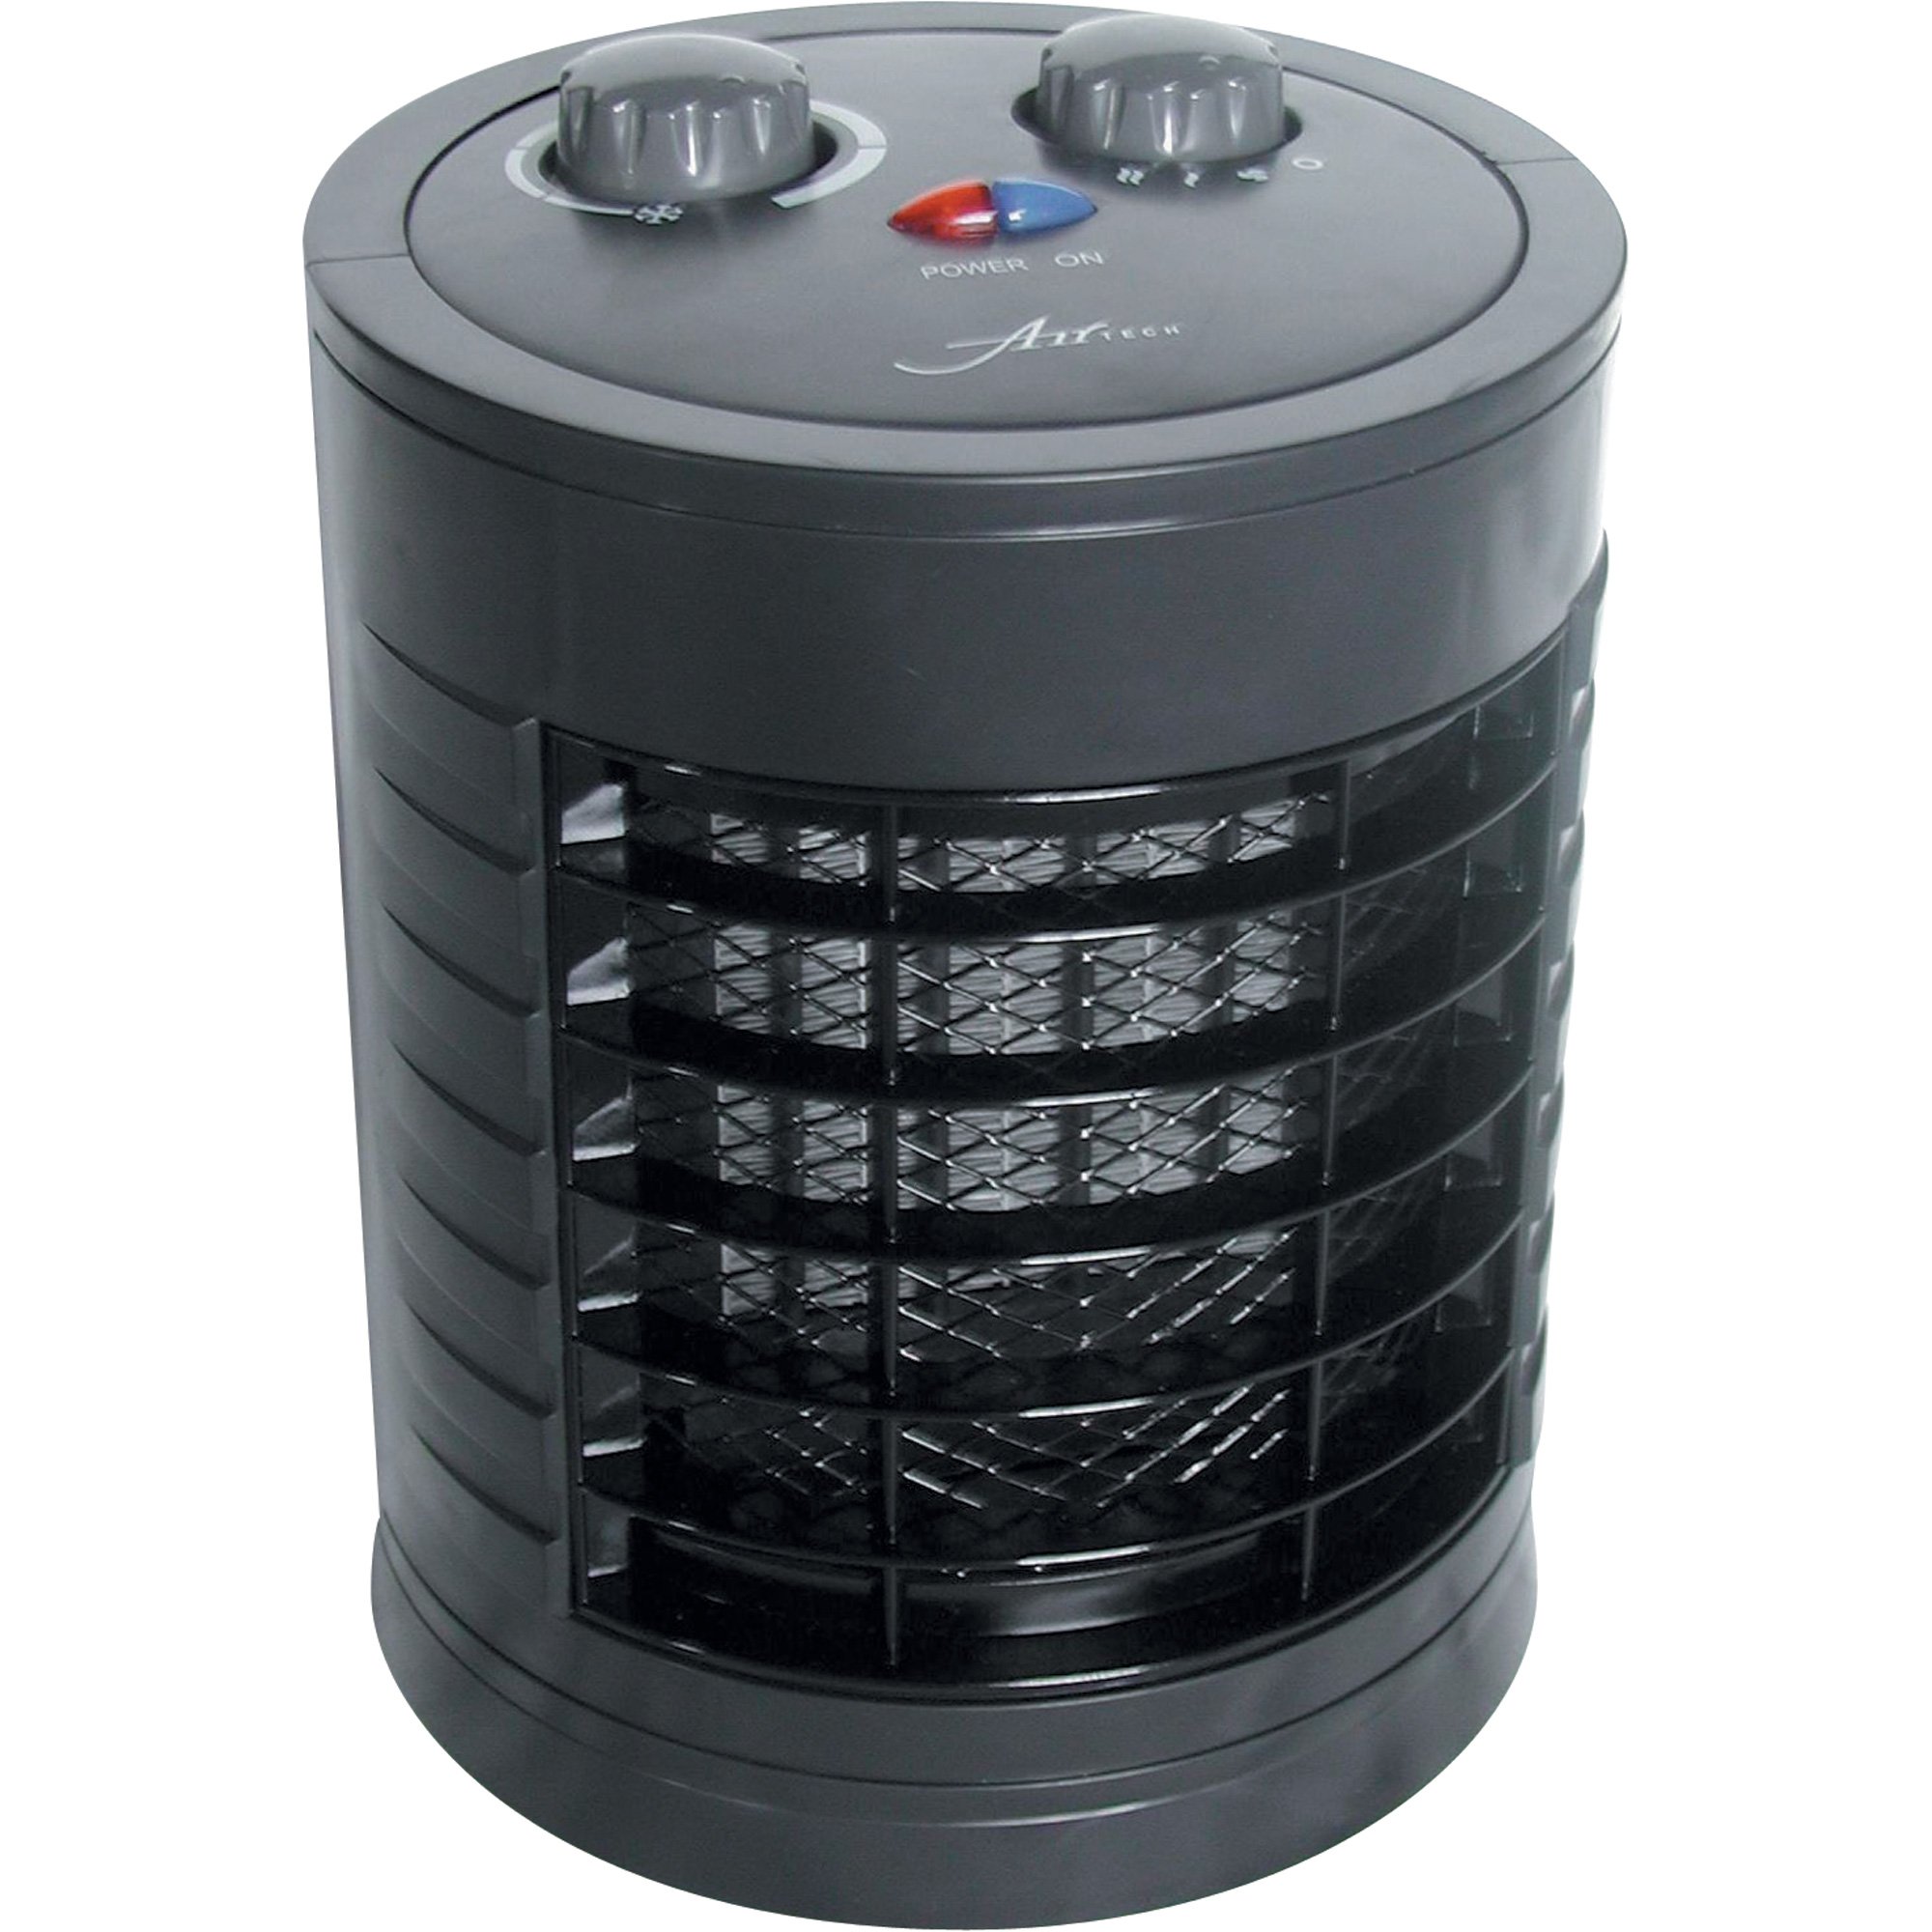  BLACK+DECKER Oscillating Space Heater, Portable Heater